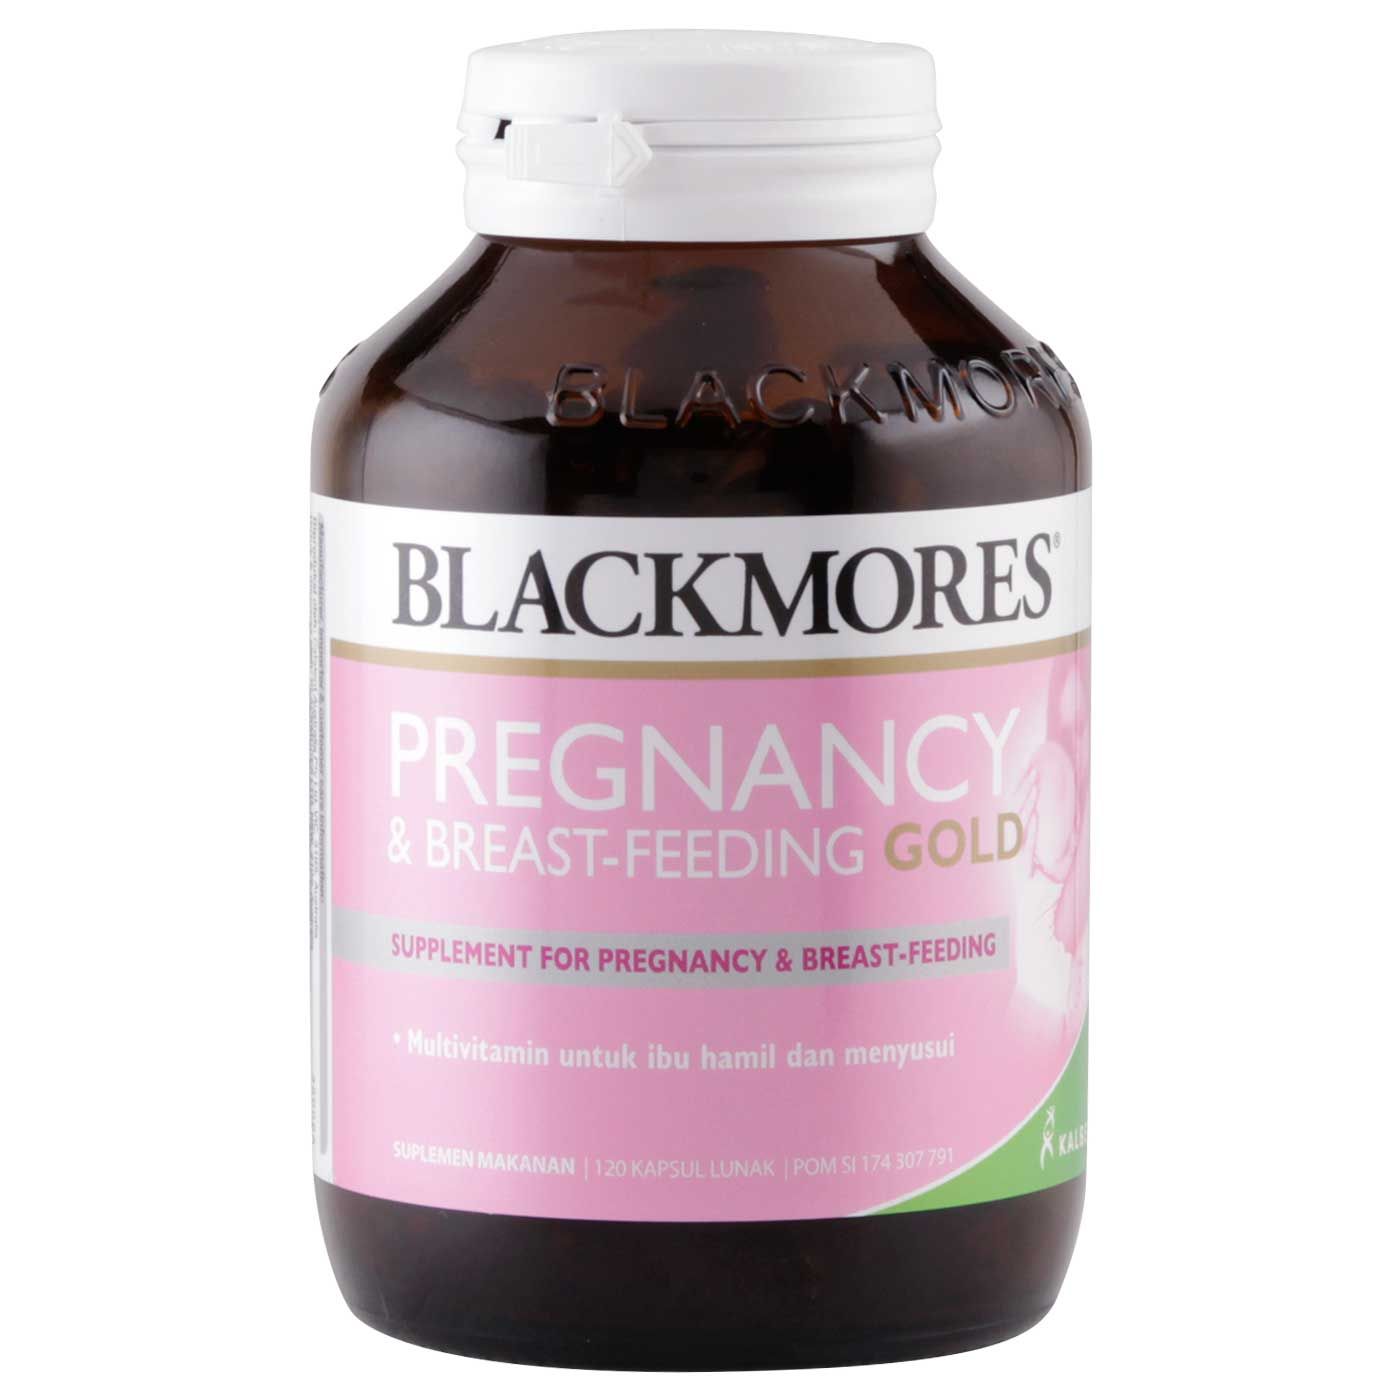 Blackmores Pregnancy & Breast-Feeding Gold (120 Tablet) - 1